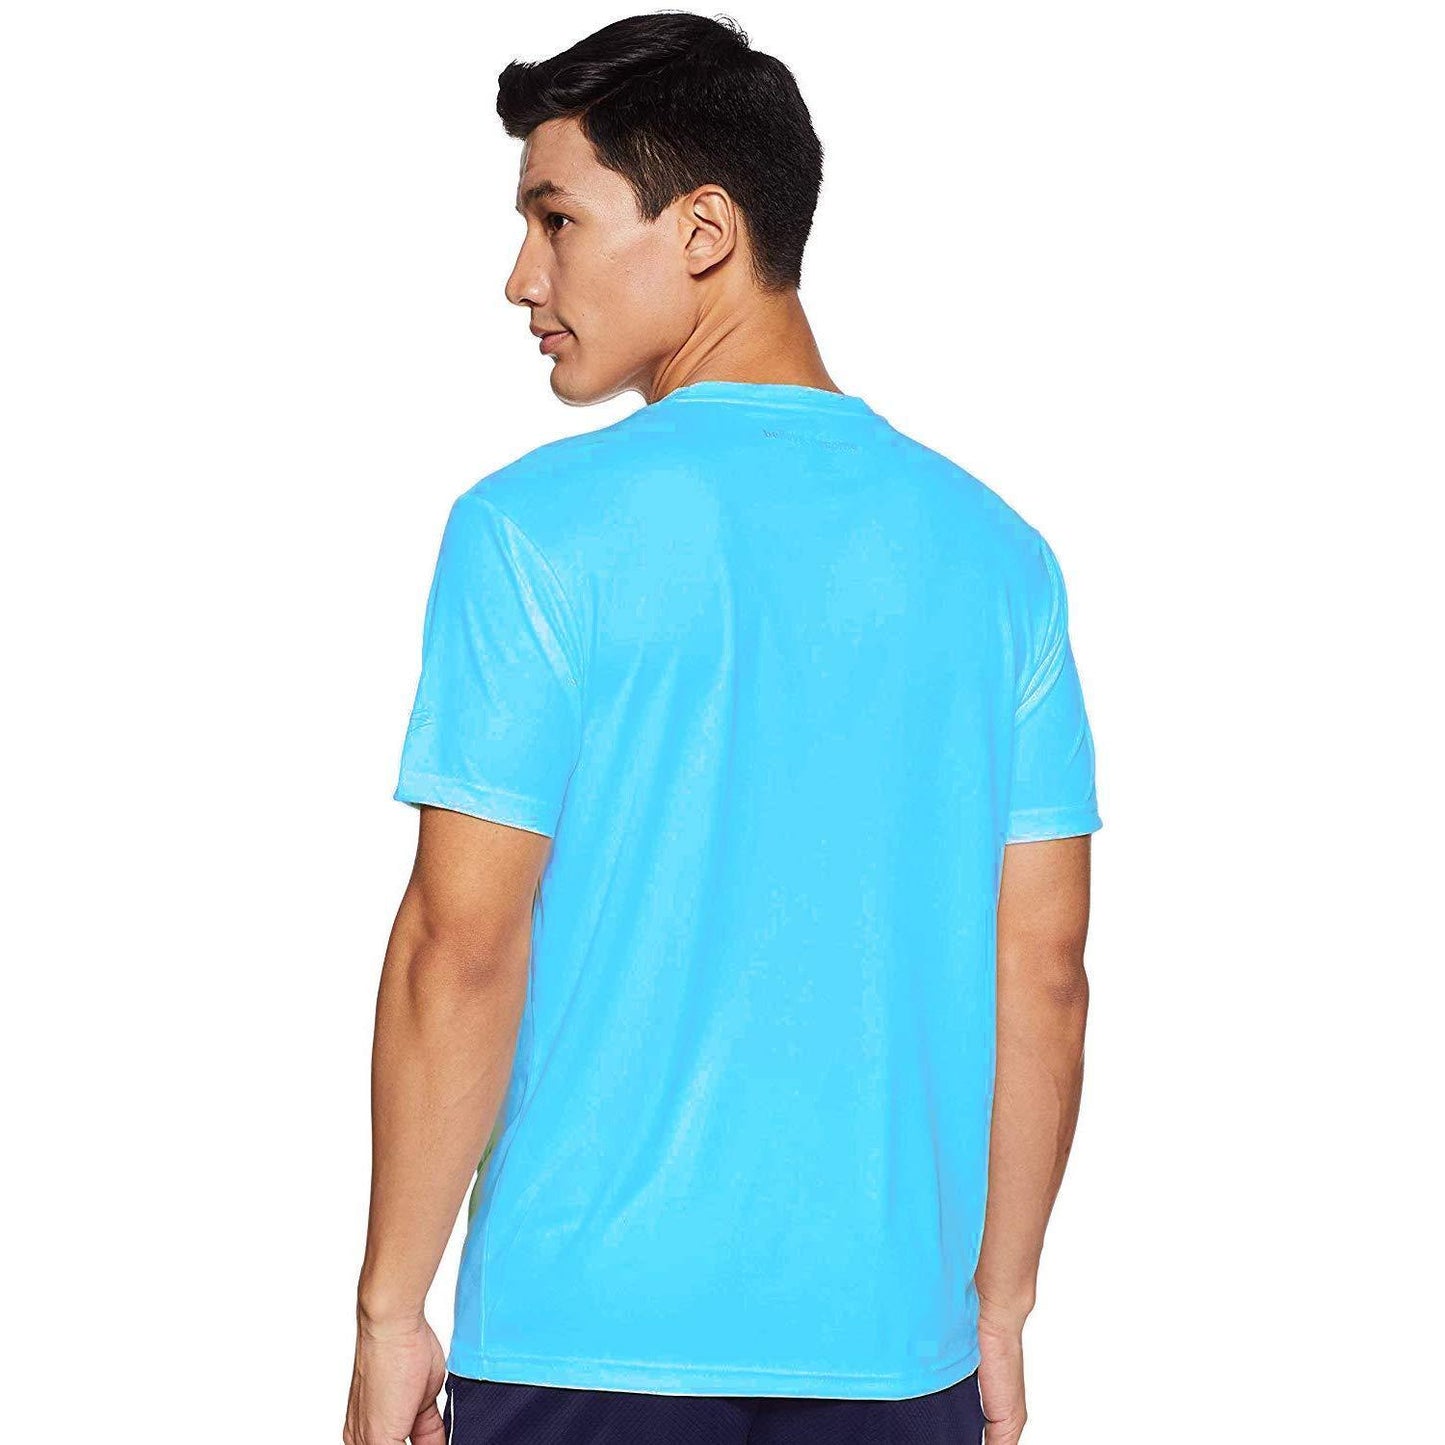 SG RTS2240 Polyester Round Neck Sports T-Shirt - A-Green - Best Price online Prokicksports.com